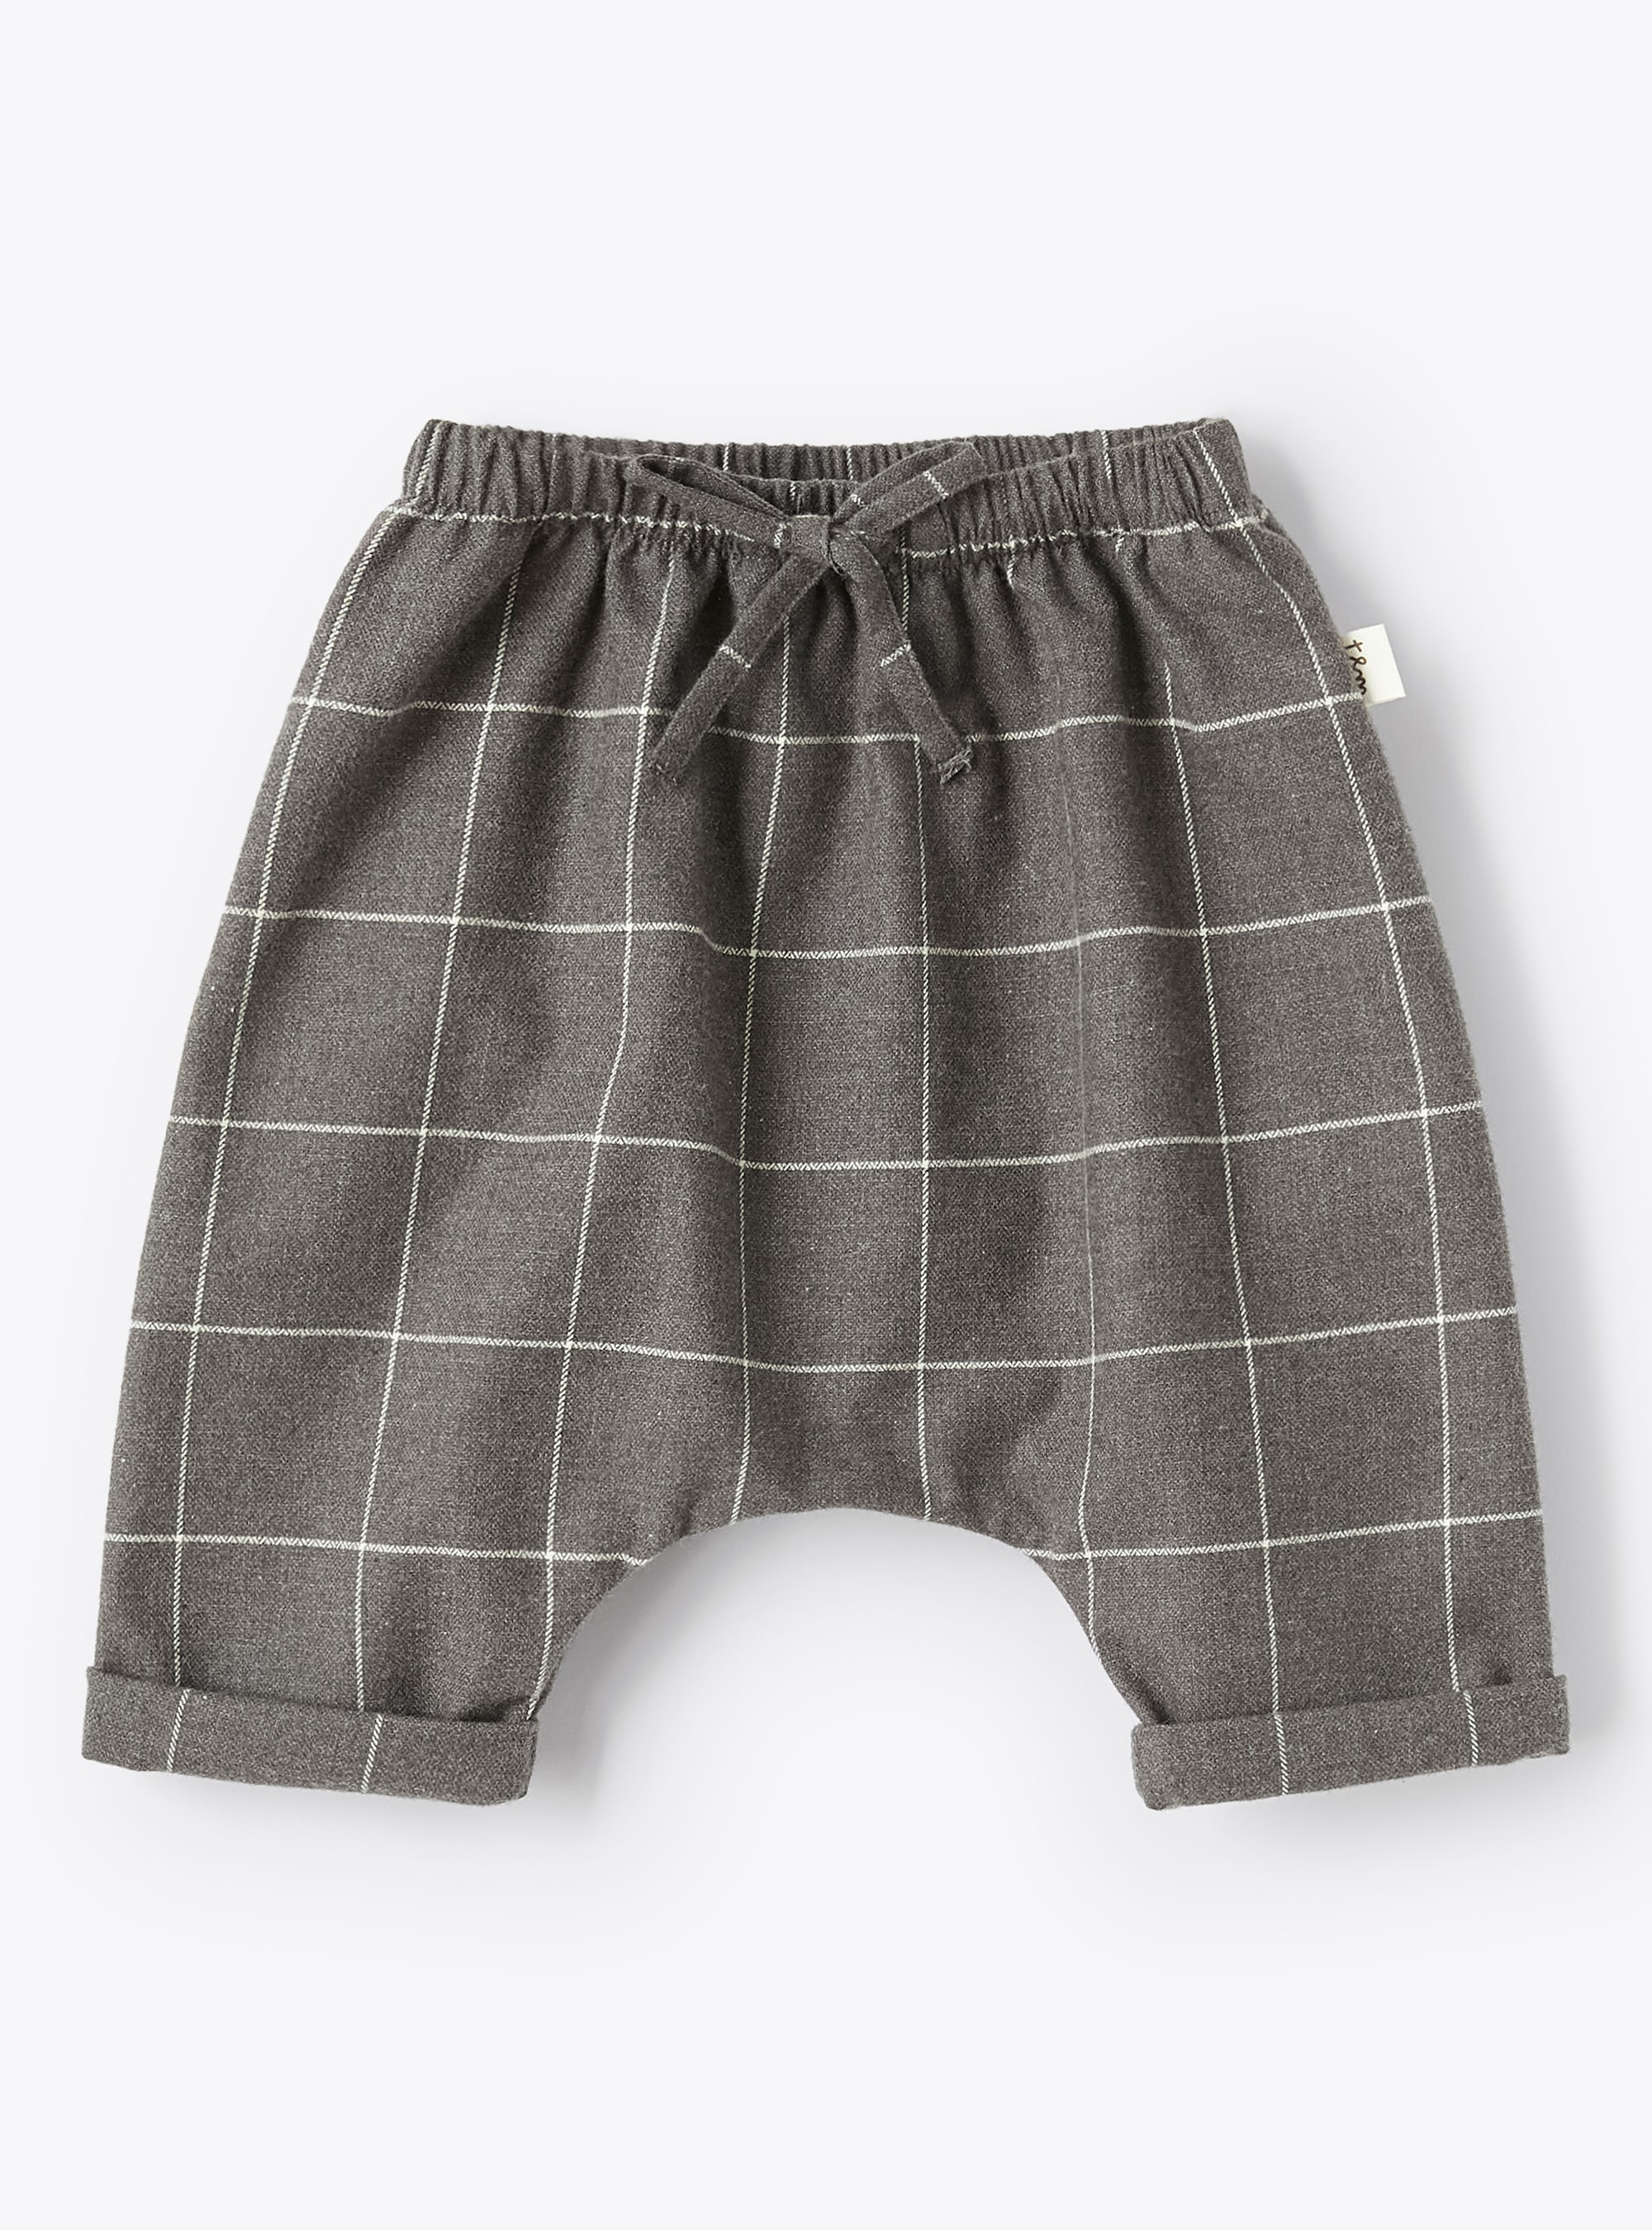 Check patterned shorts - Grey | Il Gufo